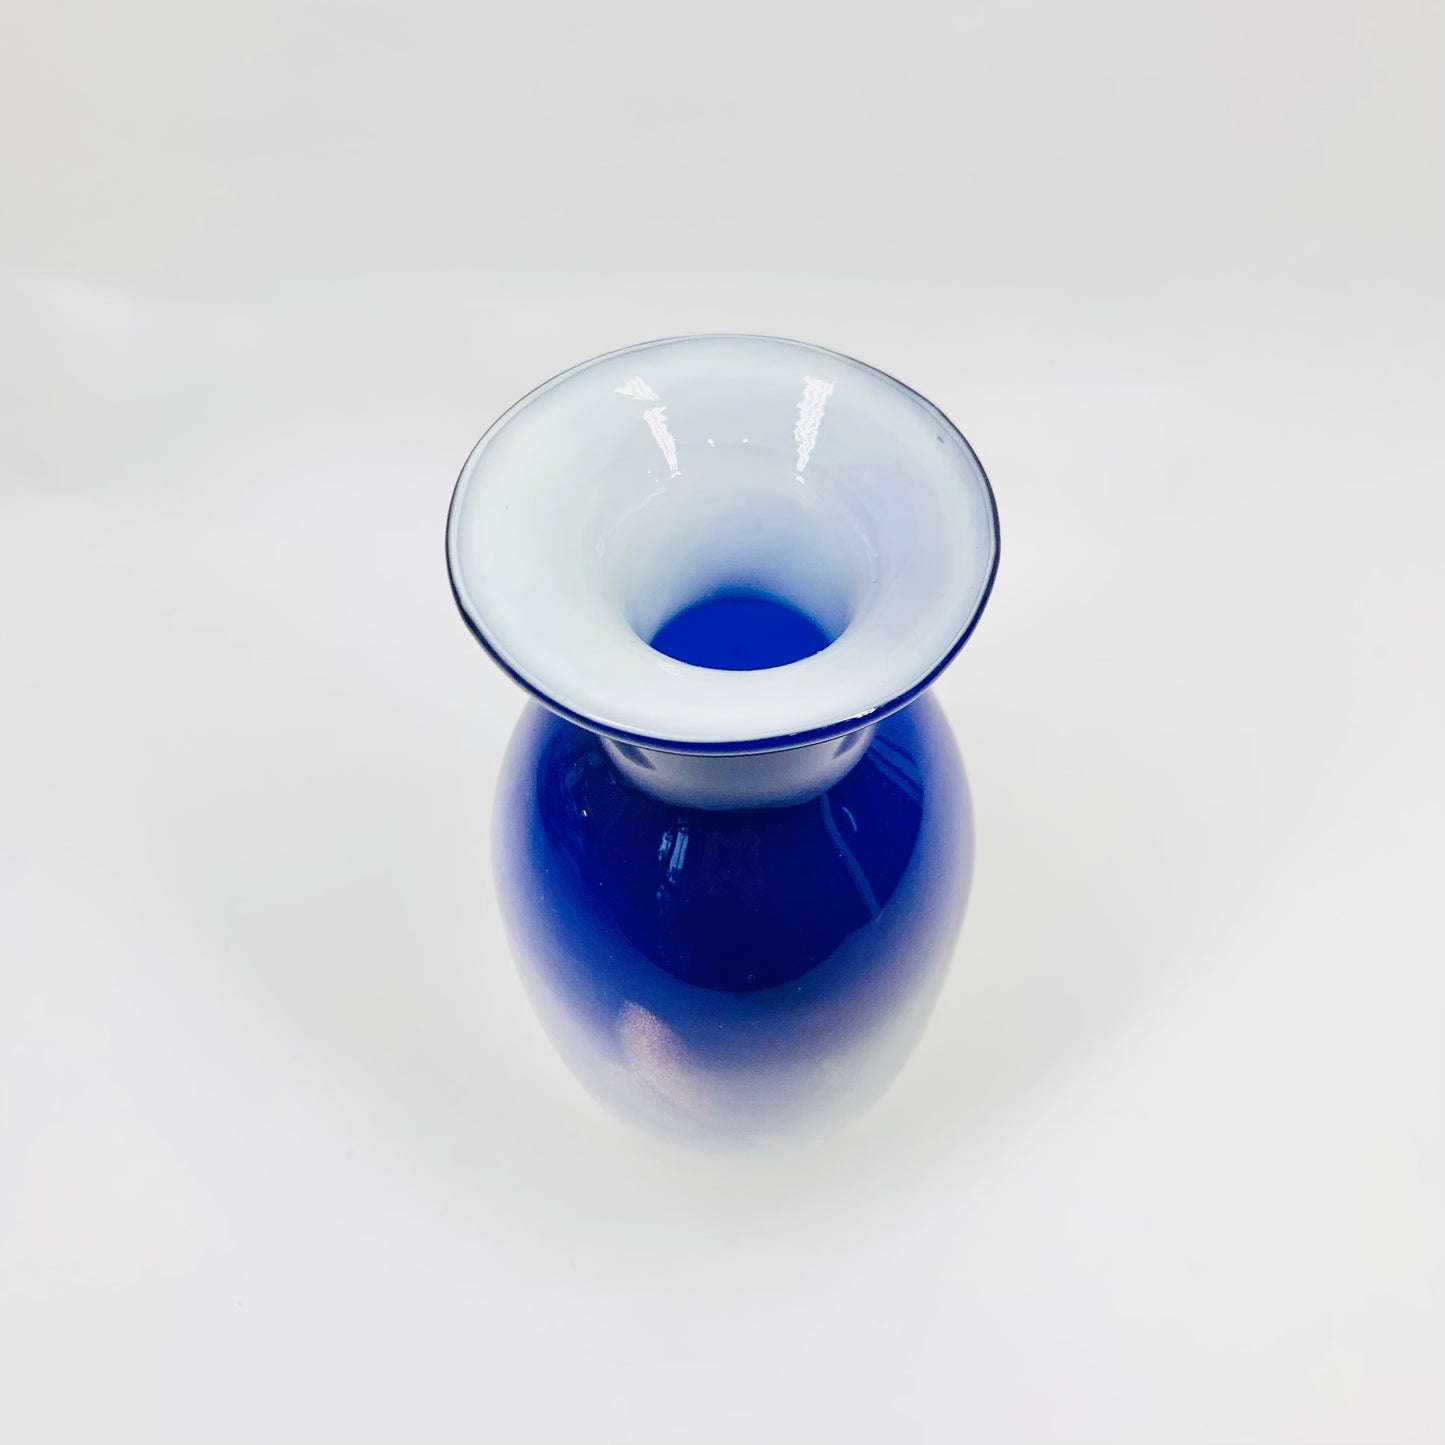 Vintage Italian blue art glass posy vase with aventurine